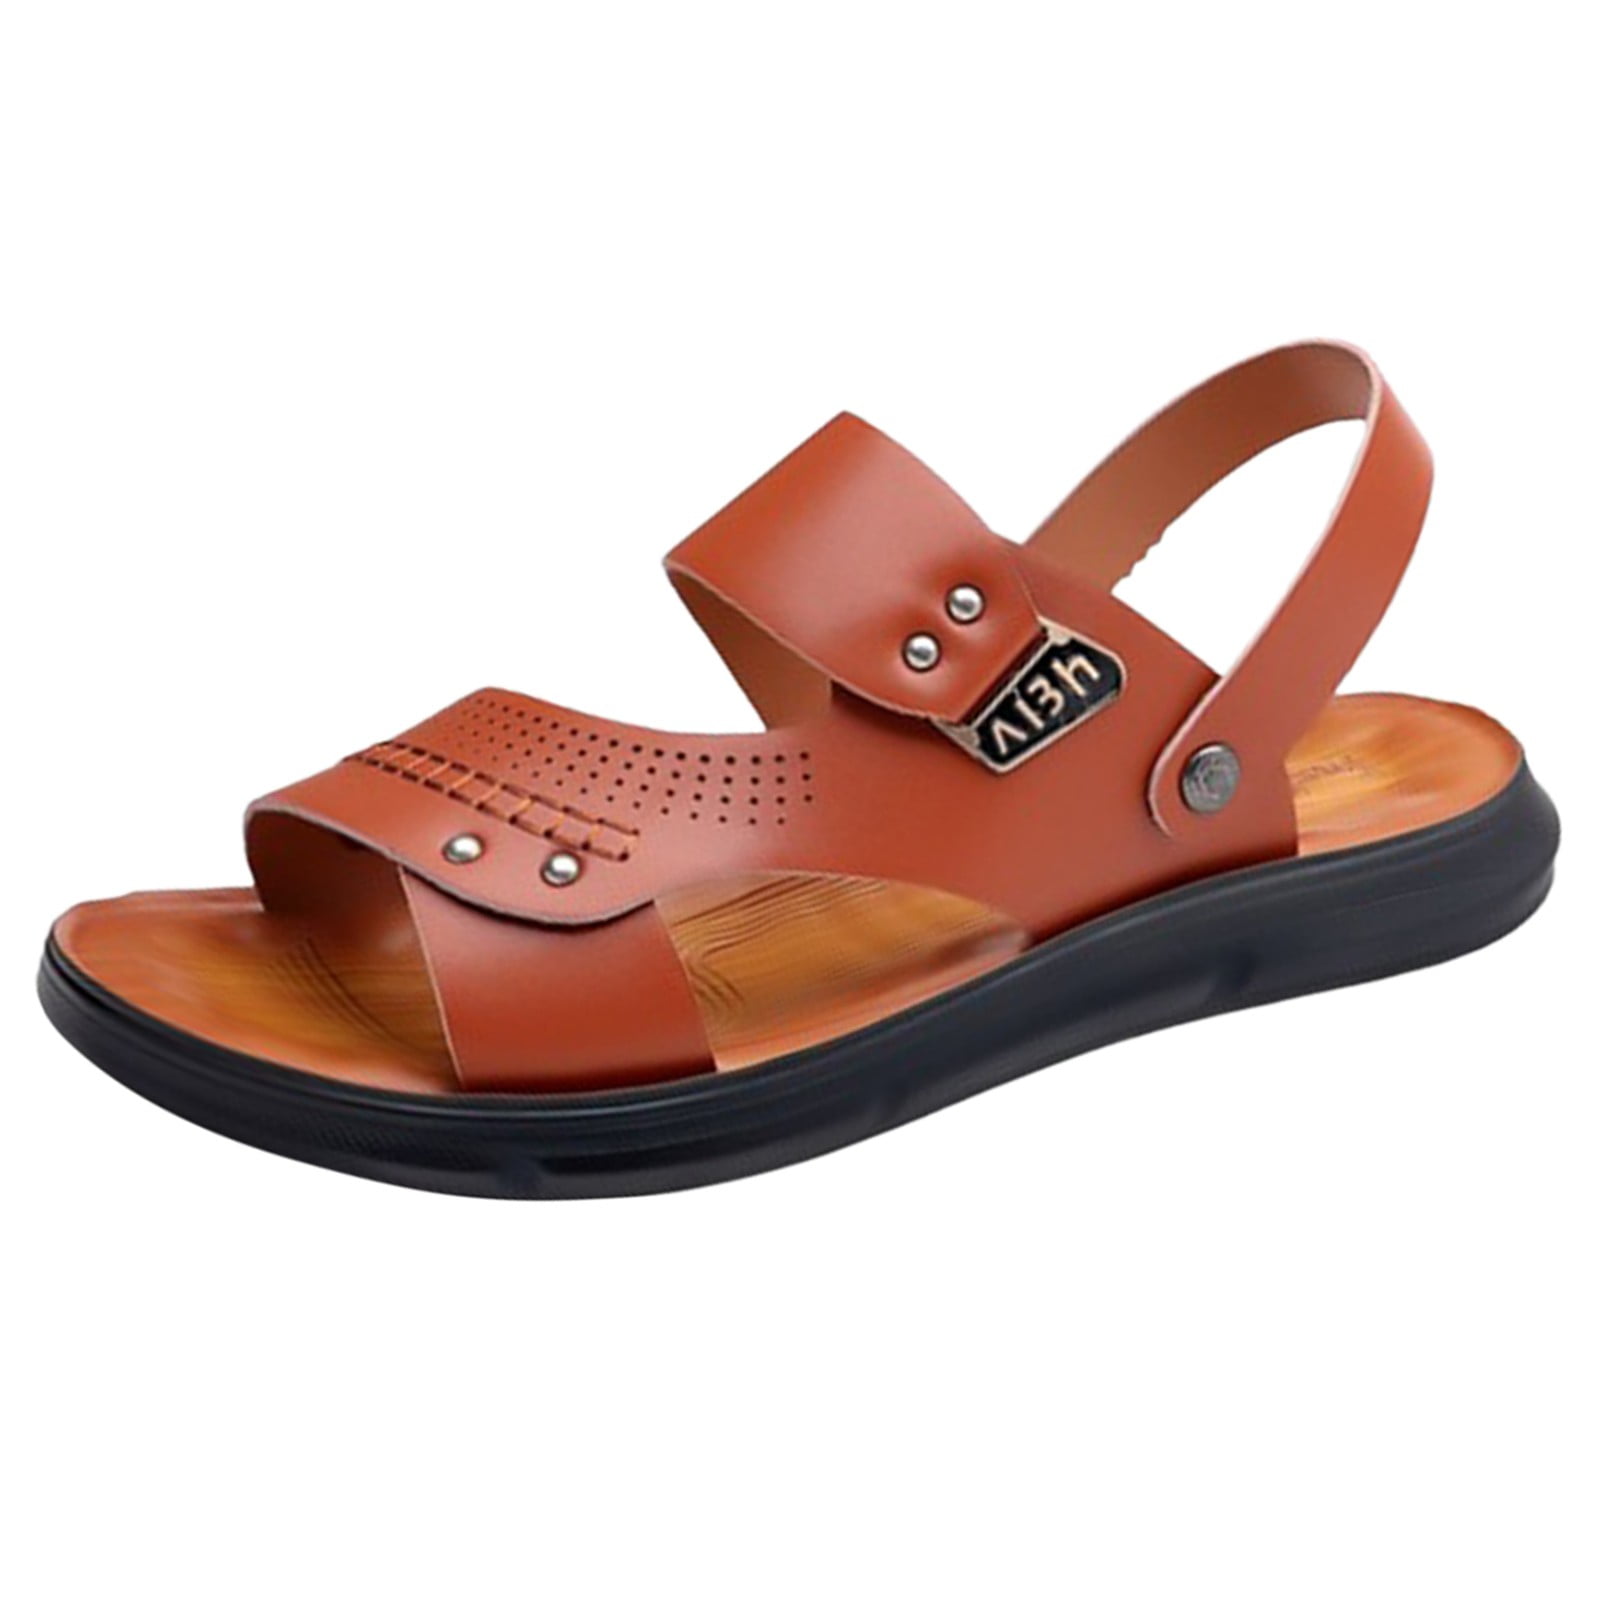 Buy Men Black Casual Sandals Online | SKU: 18-101-11-40-Metro Shoes